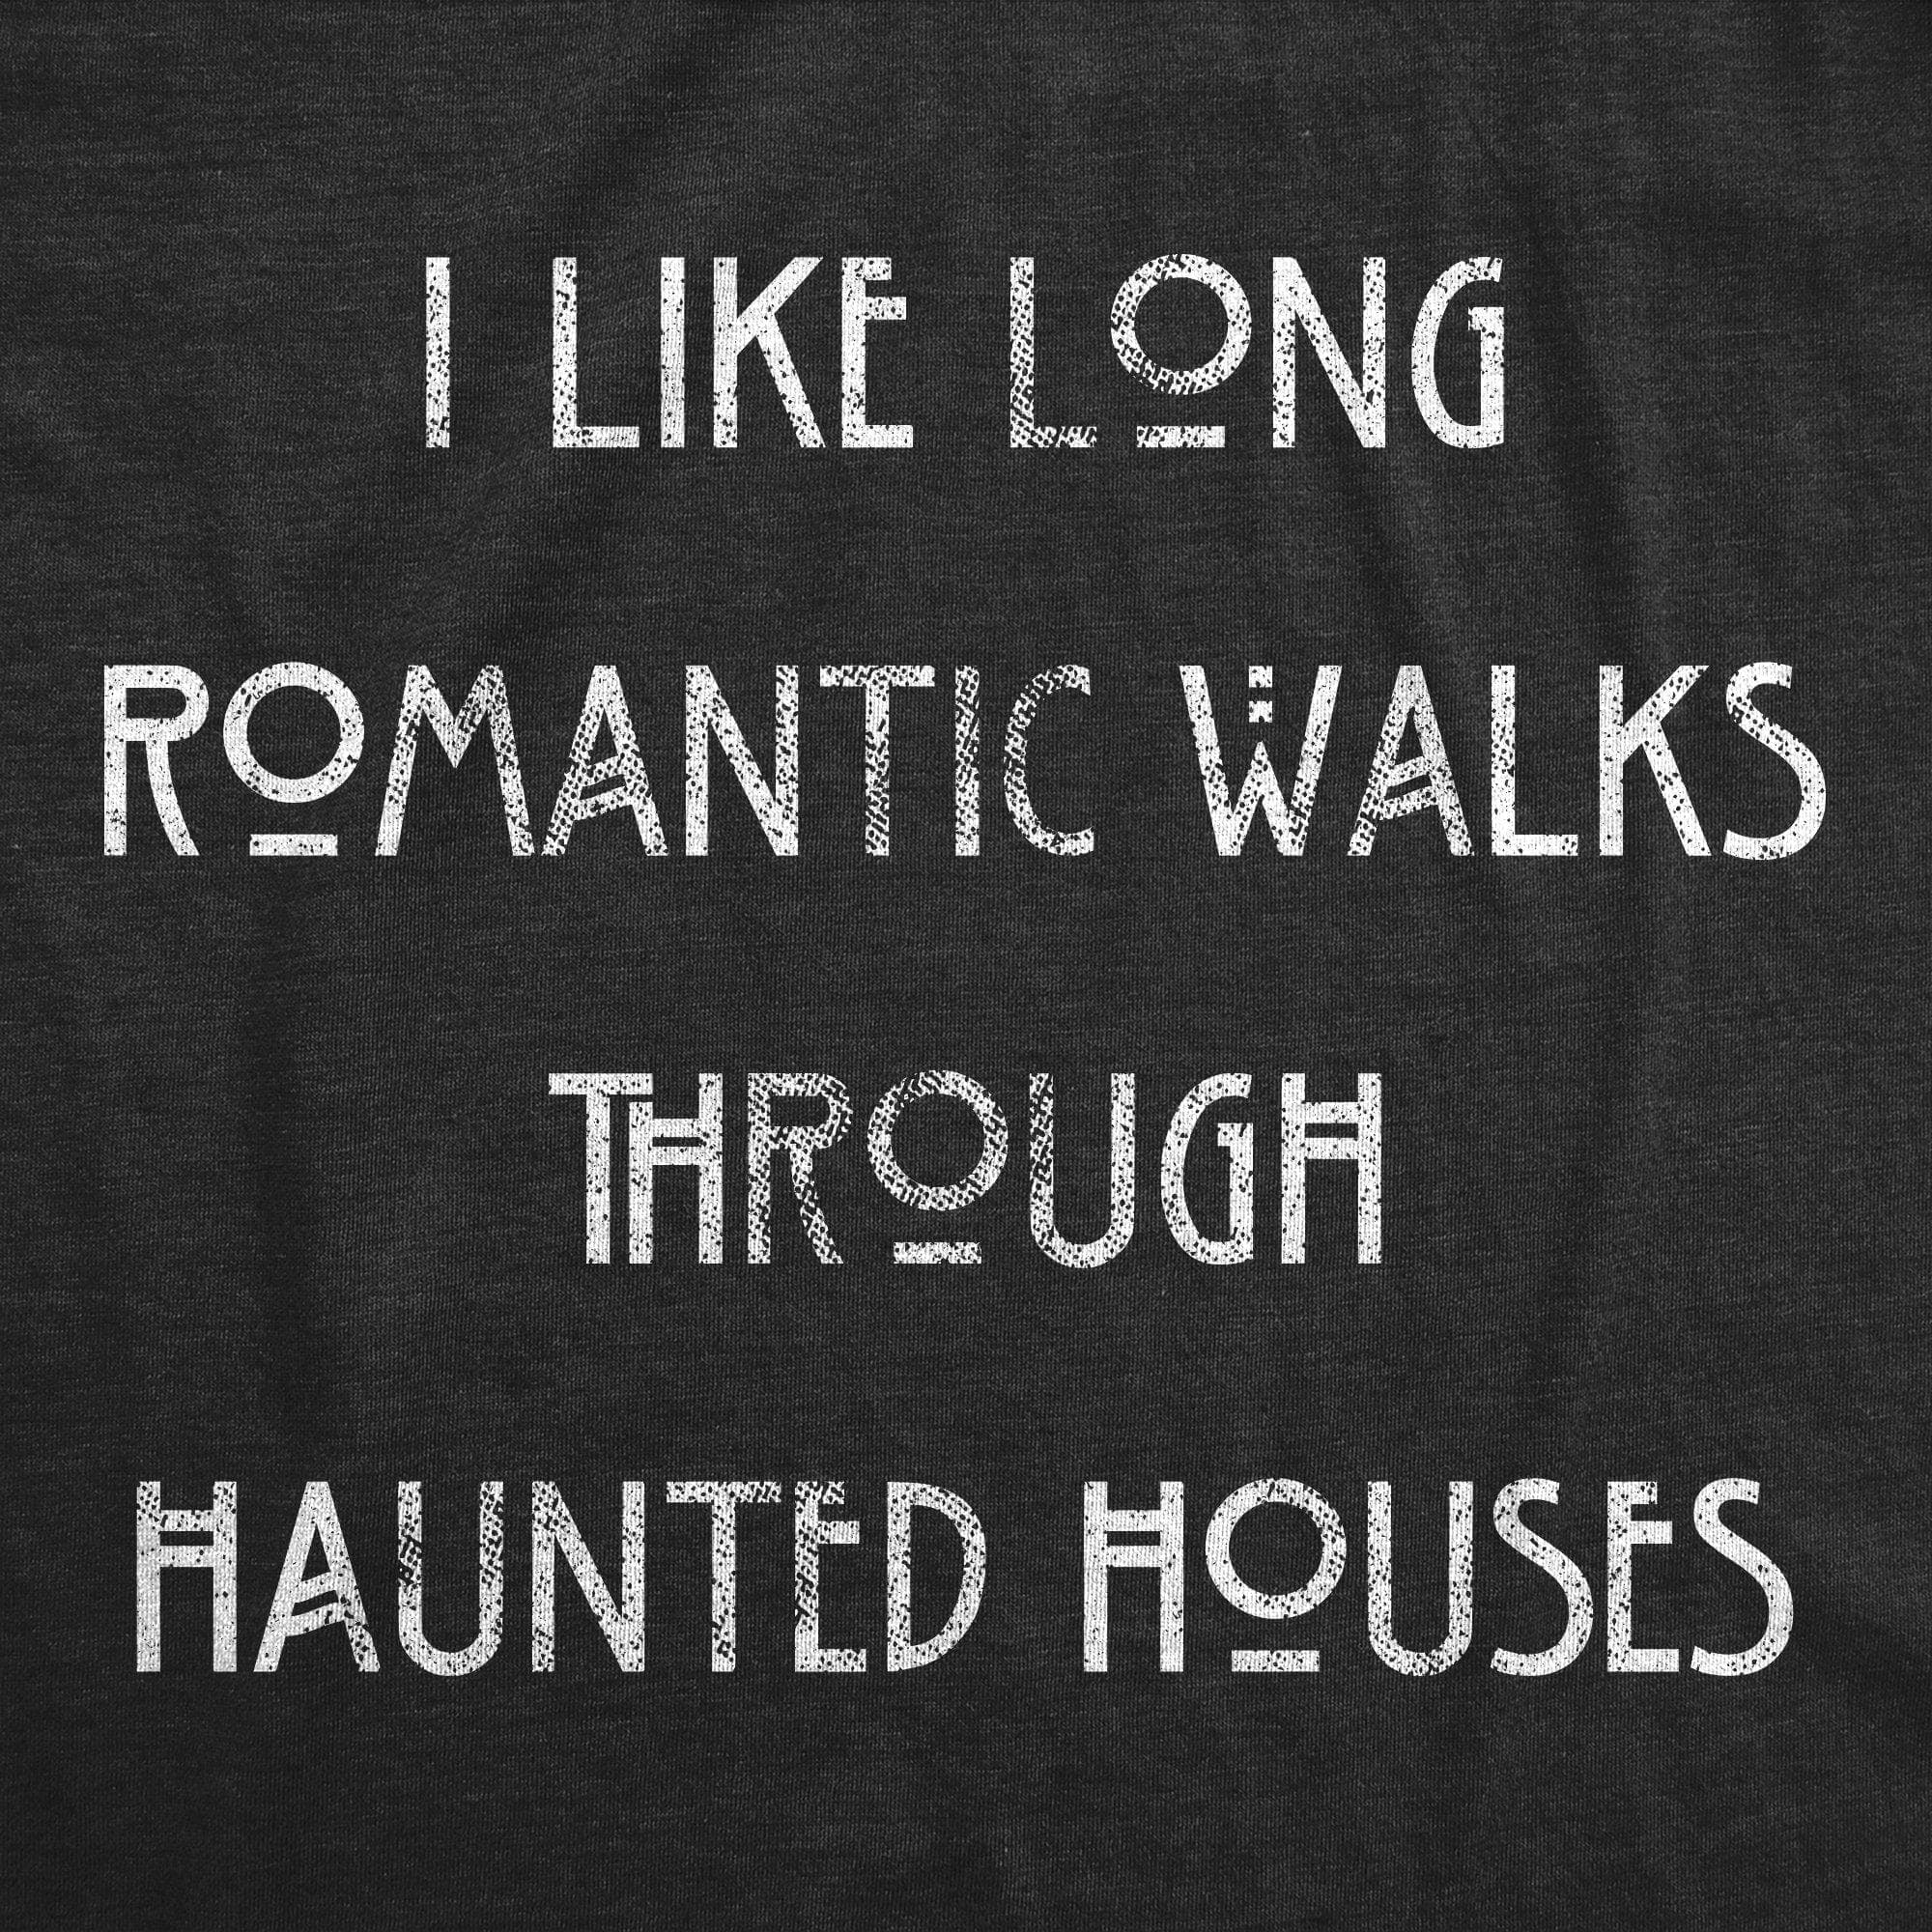 I Like Long Romantic Walks Through Haunted Houses Women's Tshirt - Crazy Dog T-Shirts